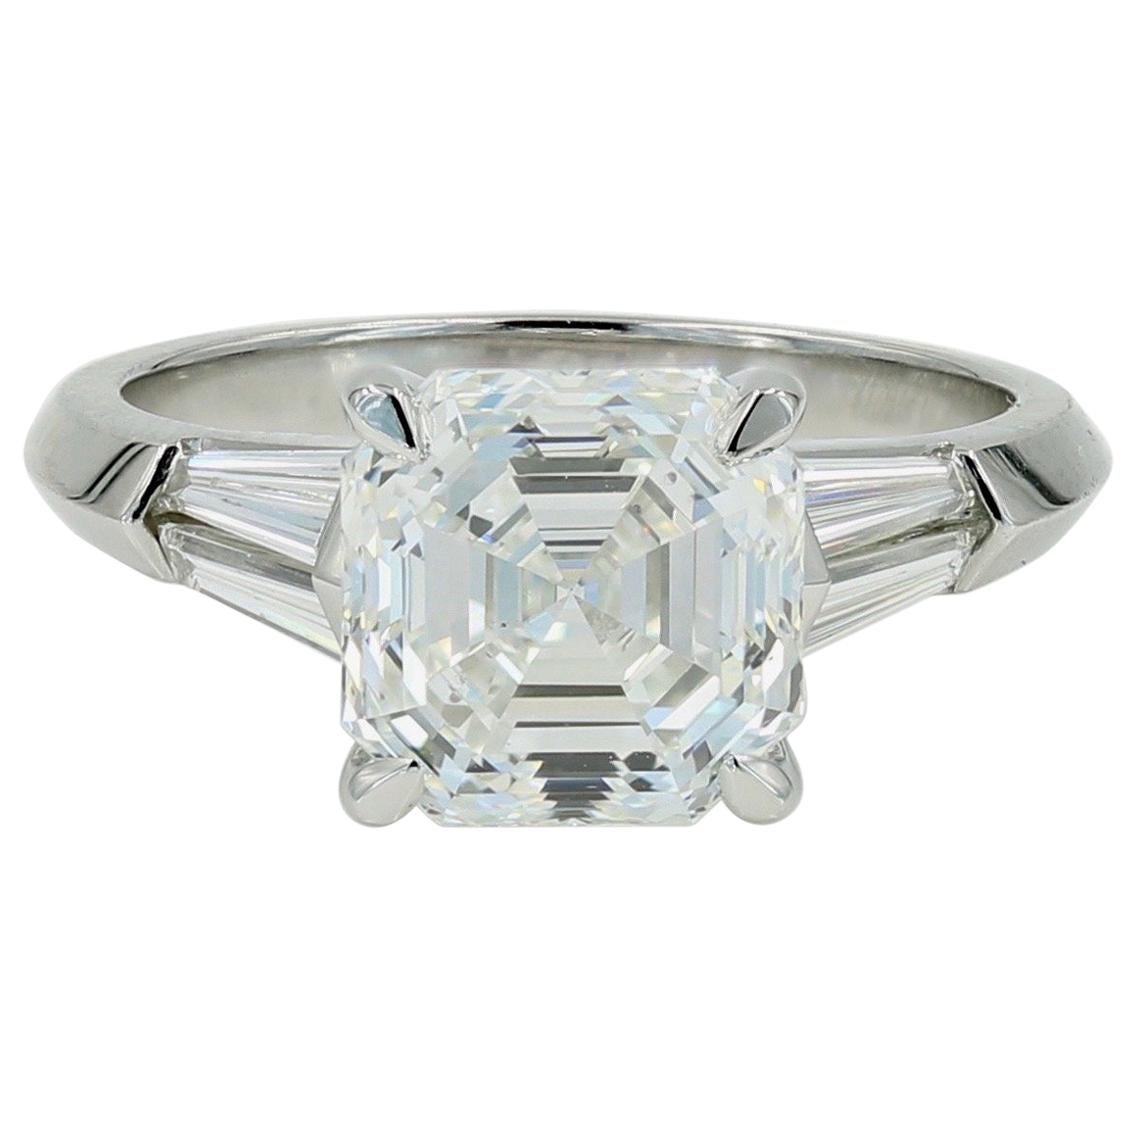 3.40 Carat Asscher Cut Diamond Ring with 4 Baguette Cut Diamonds in Platinum